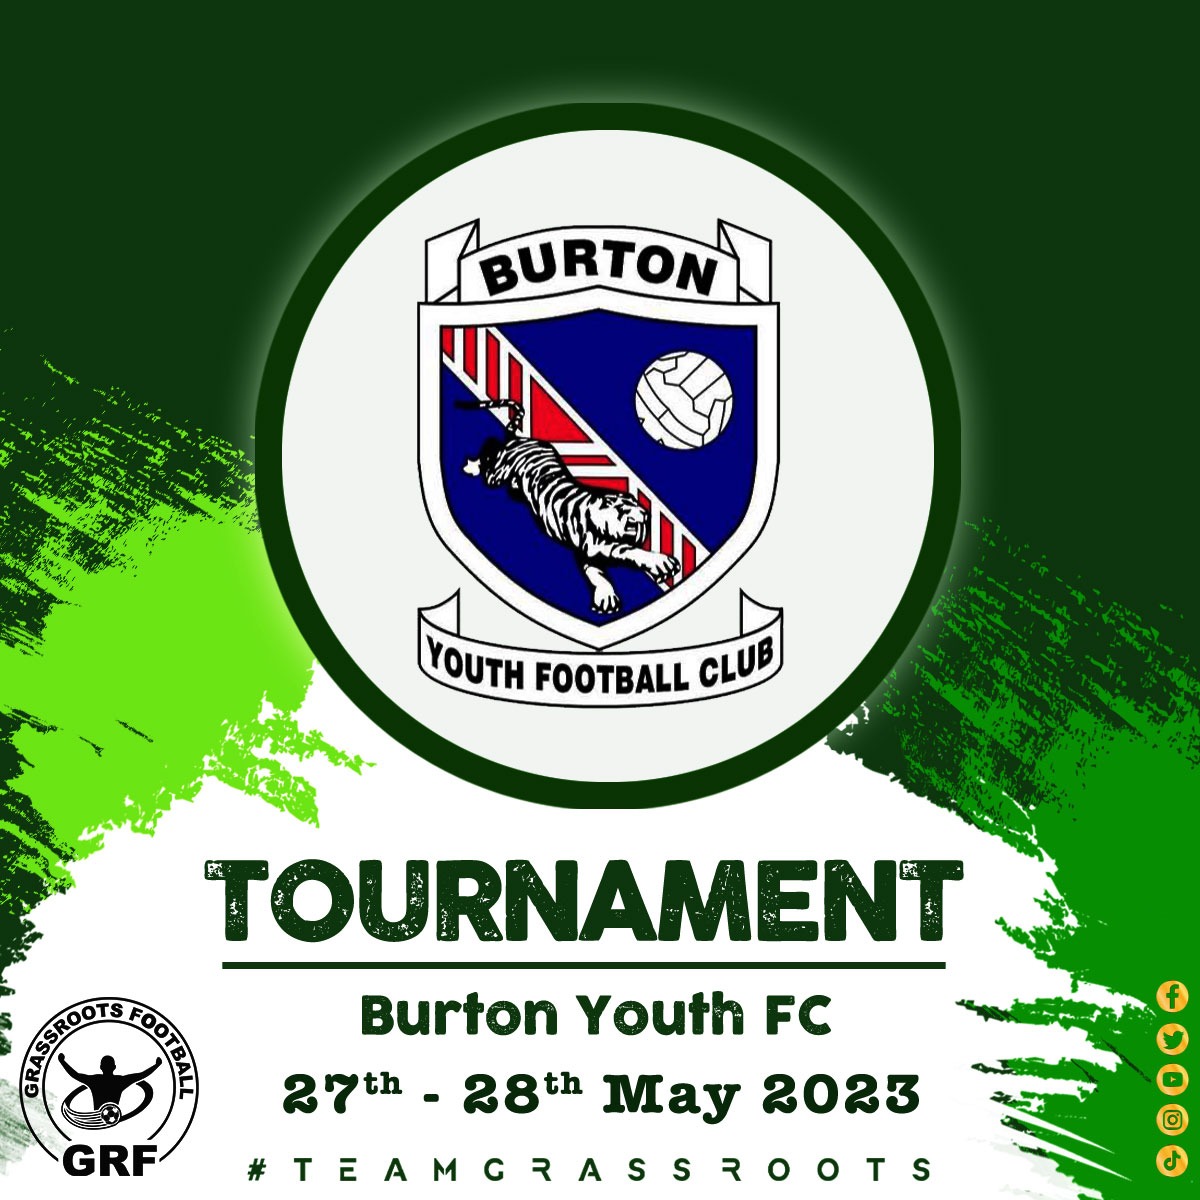 BURTON YOUTH FC FOOTBALL TOURNAMENT Team Grassroots Tournament